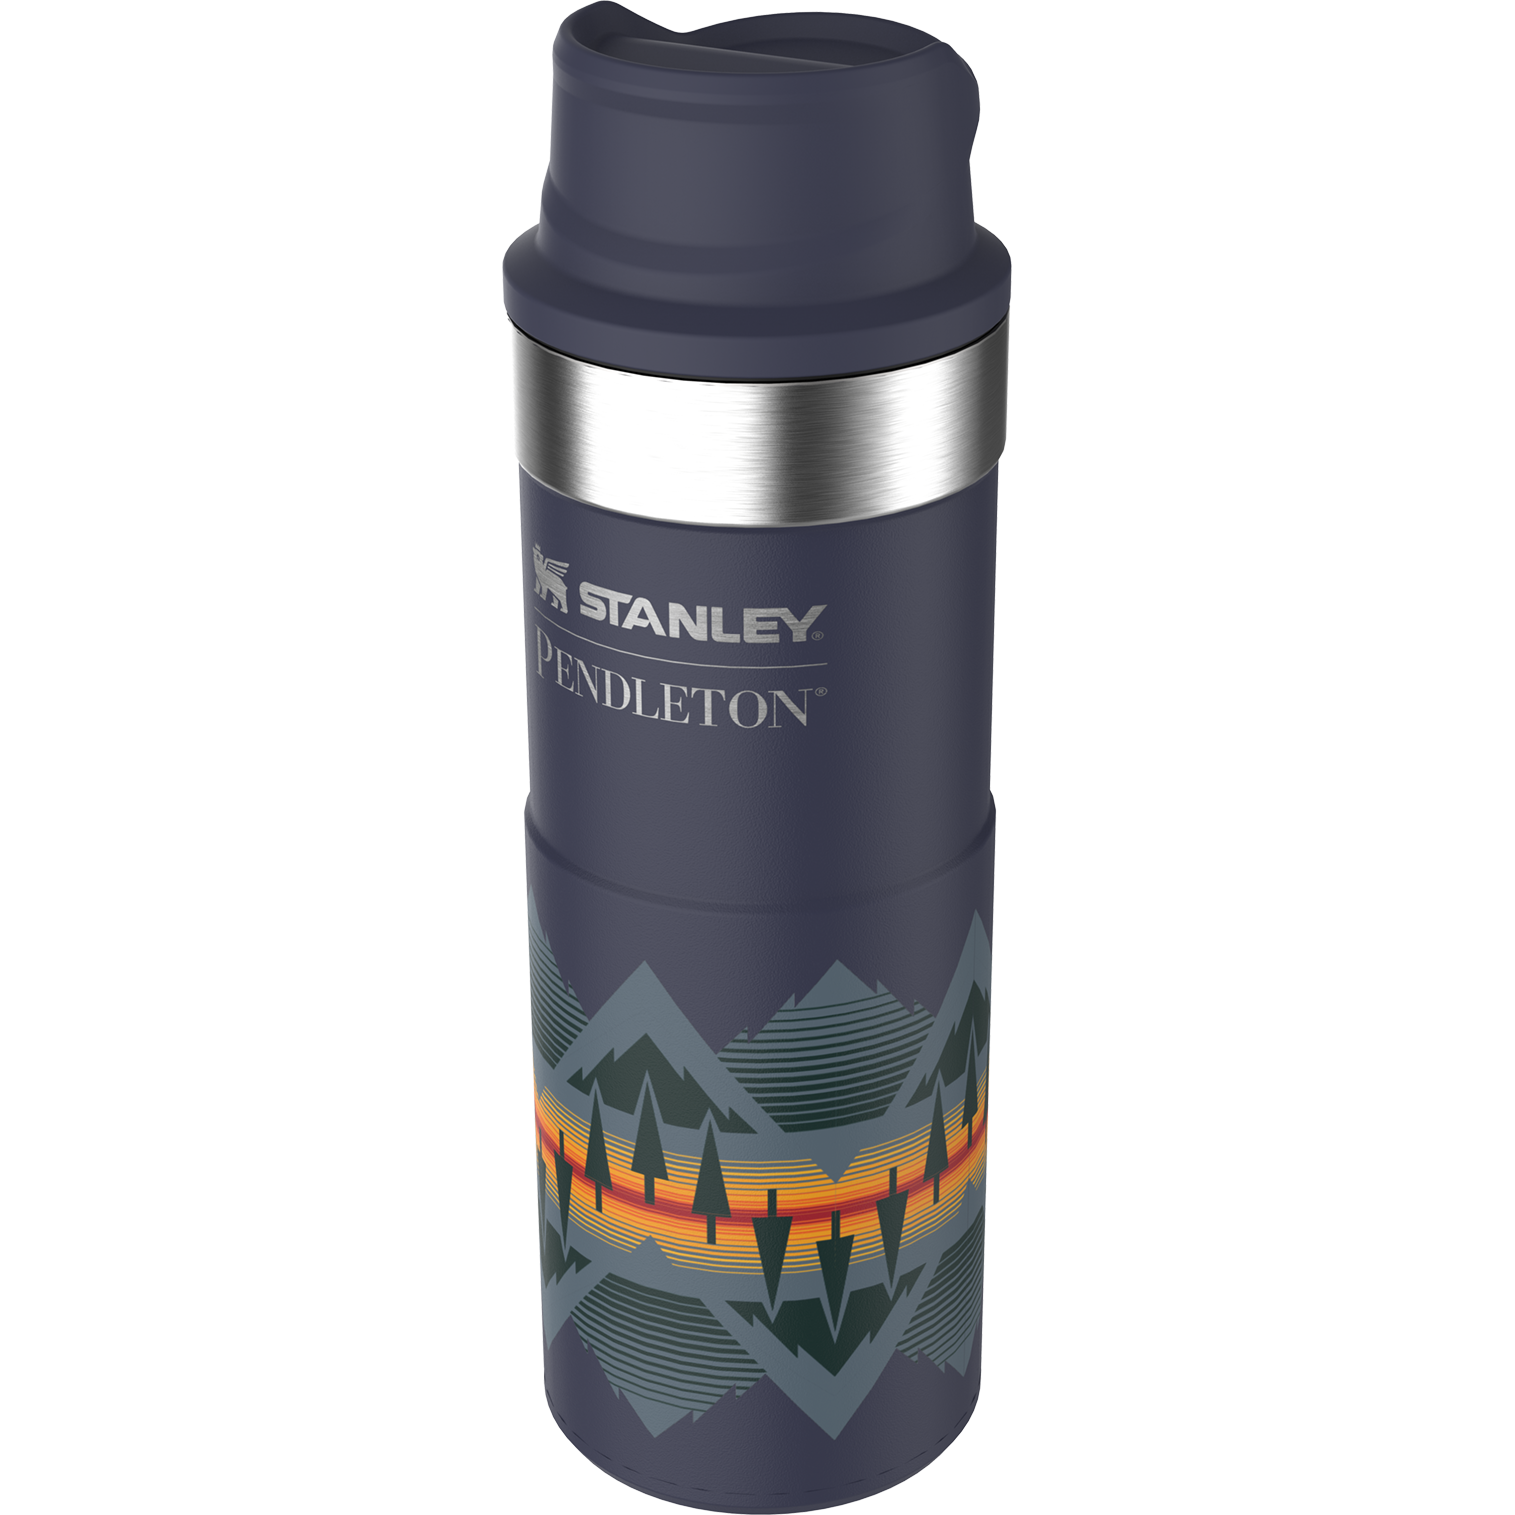 Pendleton Wildland Heroes Trigger-Action Travel Mug 0.47L